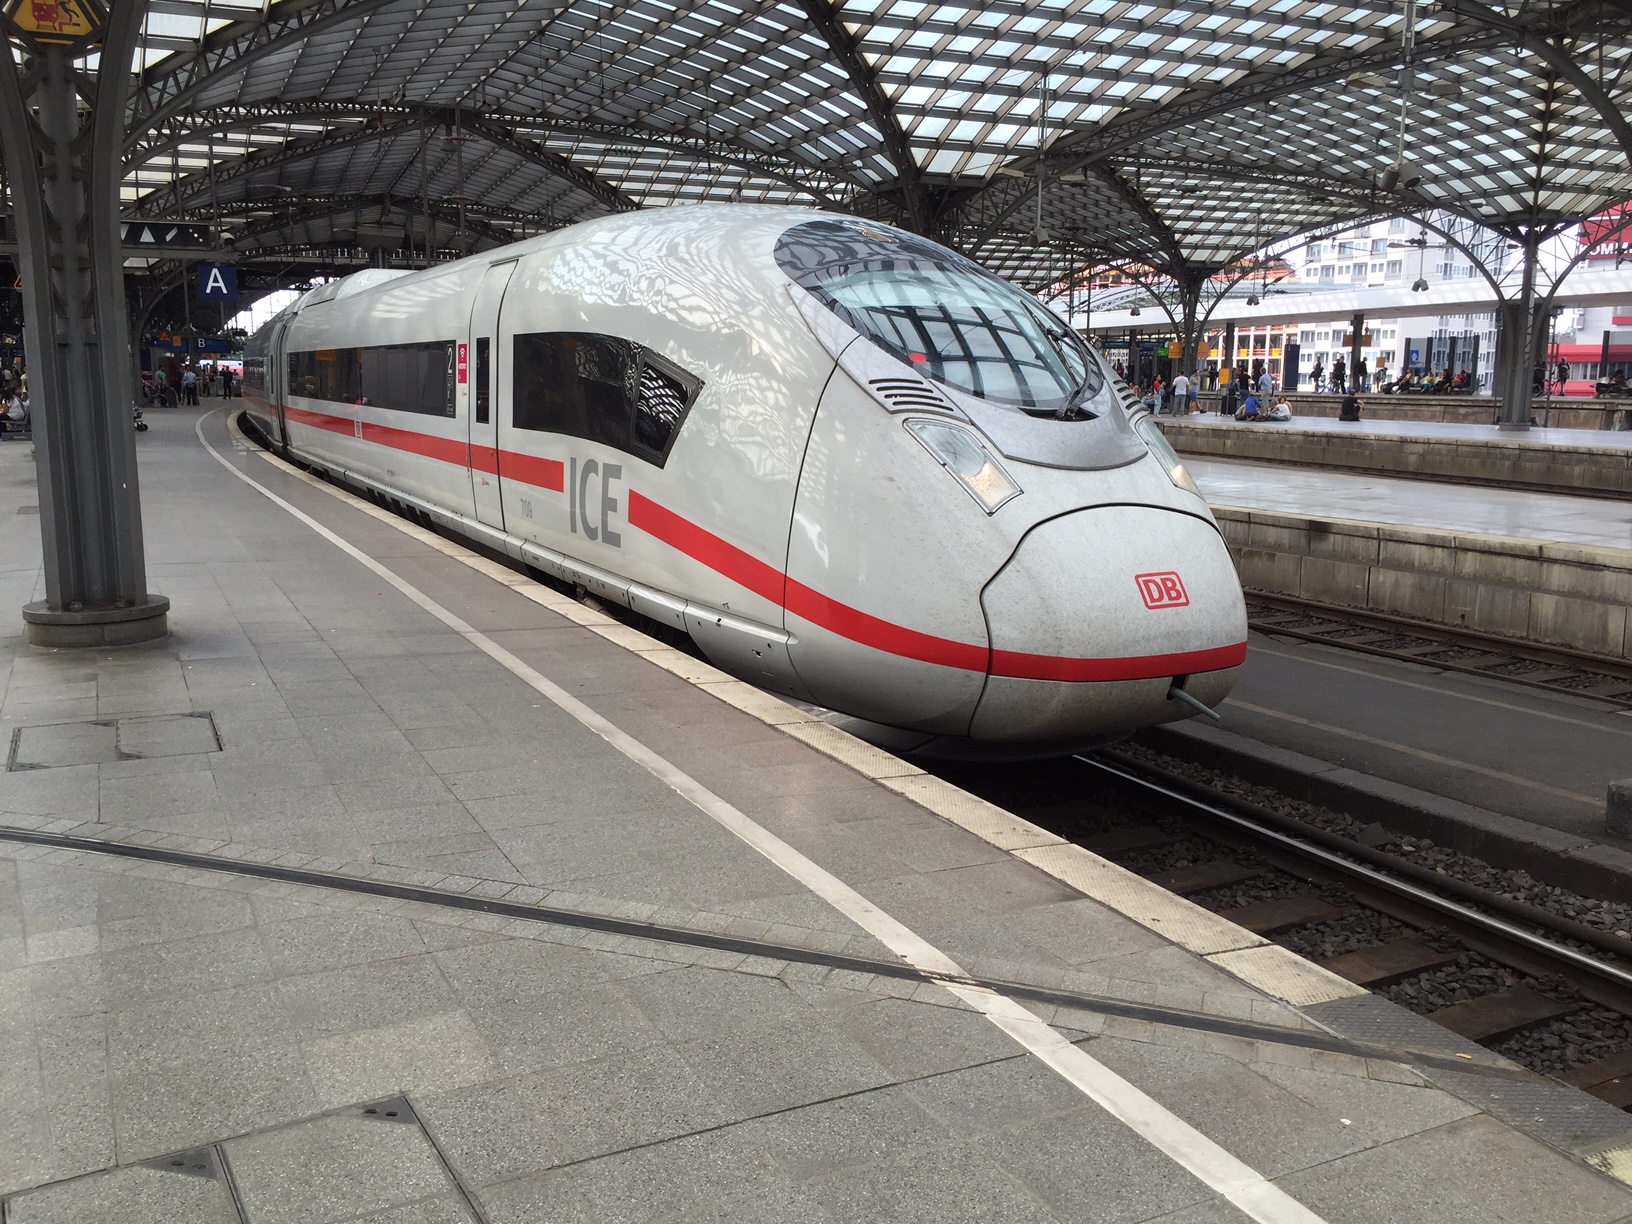 Germany: The ICE Train.